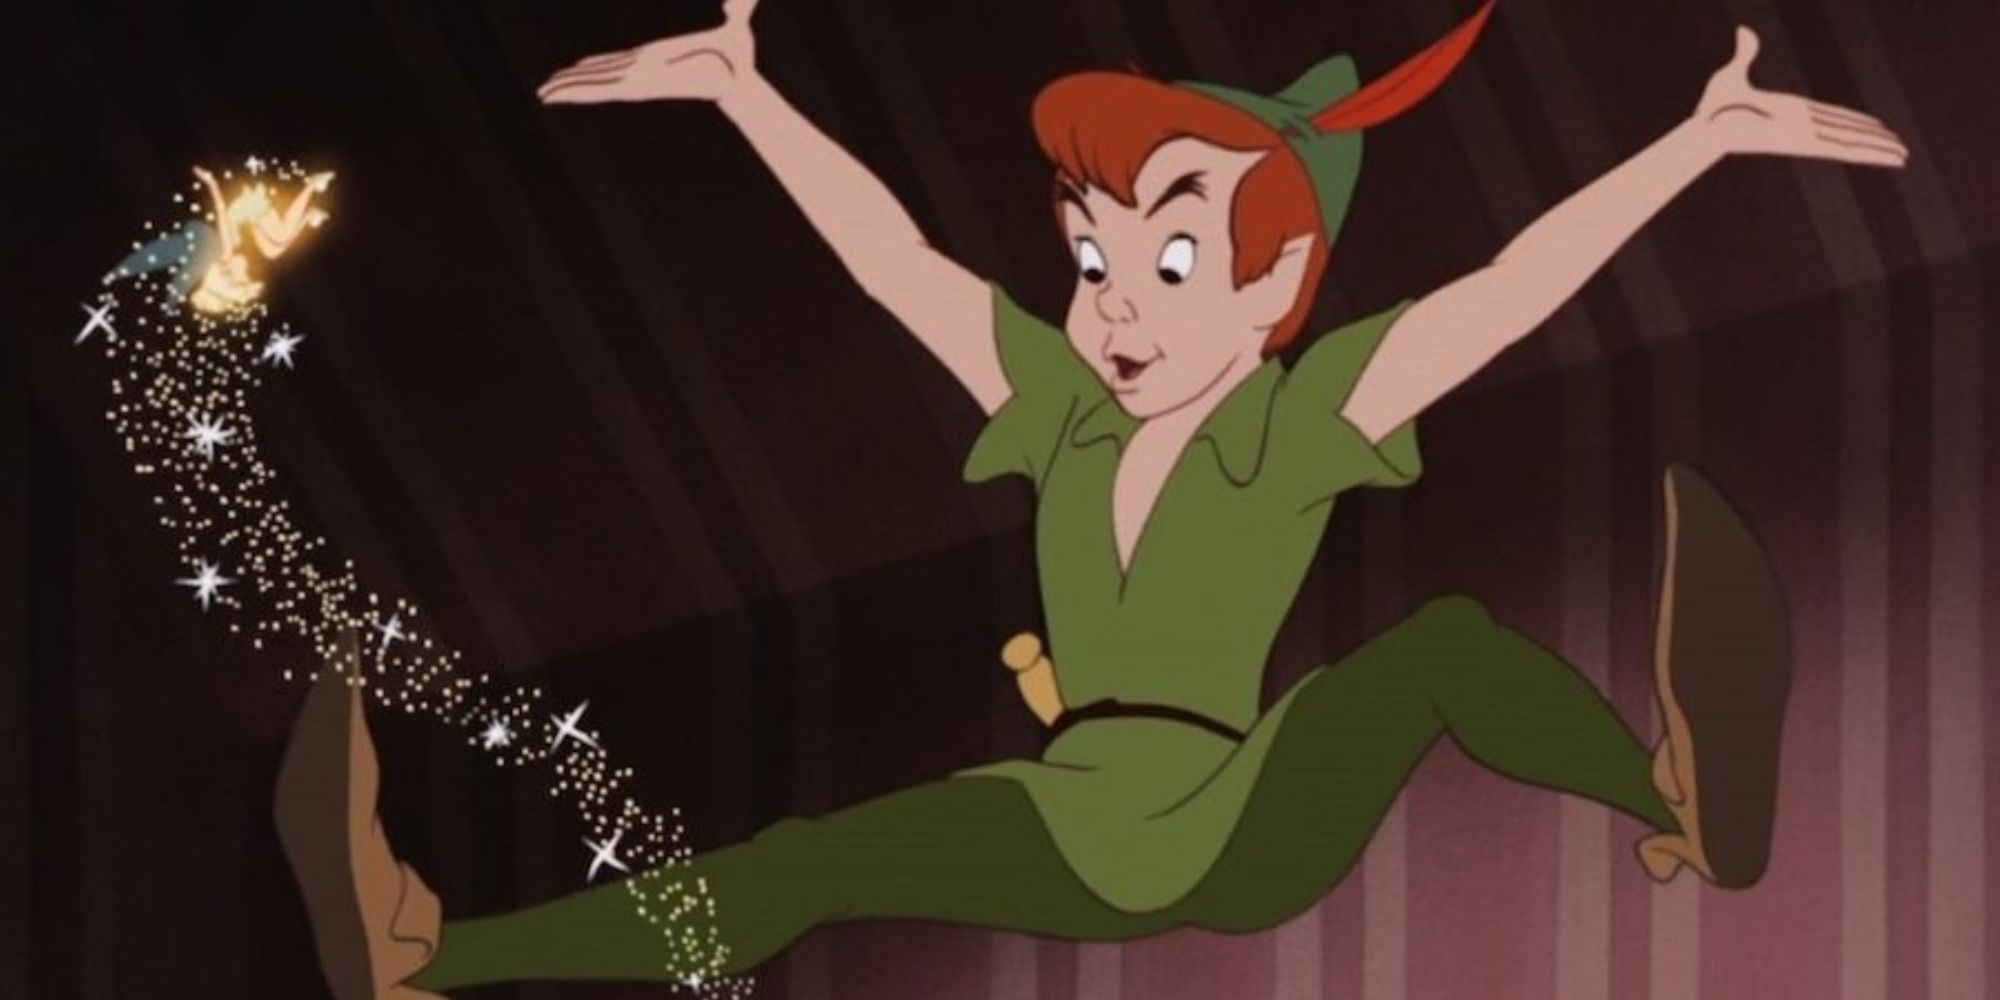 Peter Pan and Tinker Bell in Disney's Peter Pan in Flight